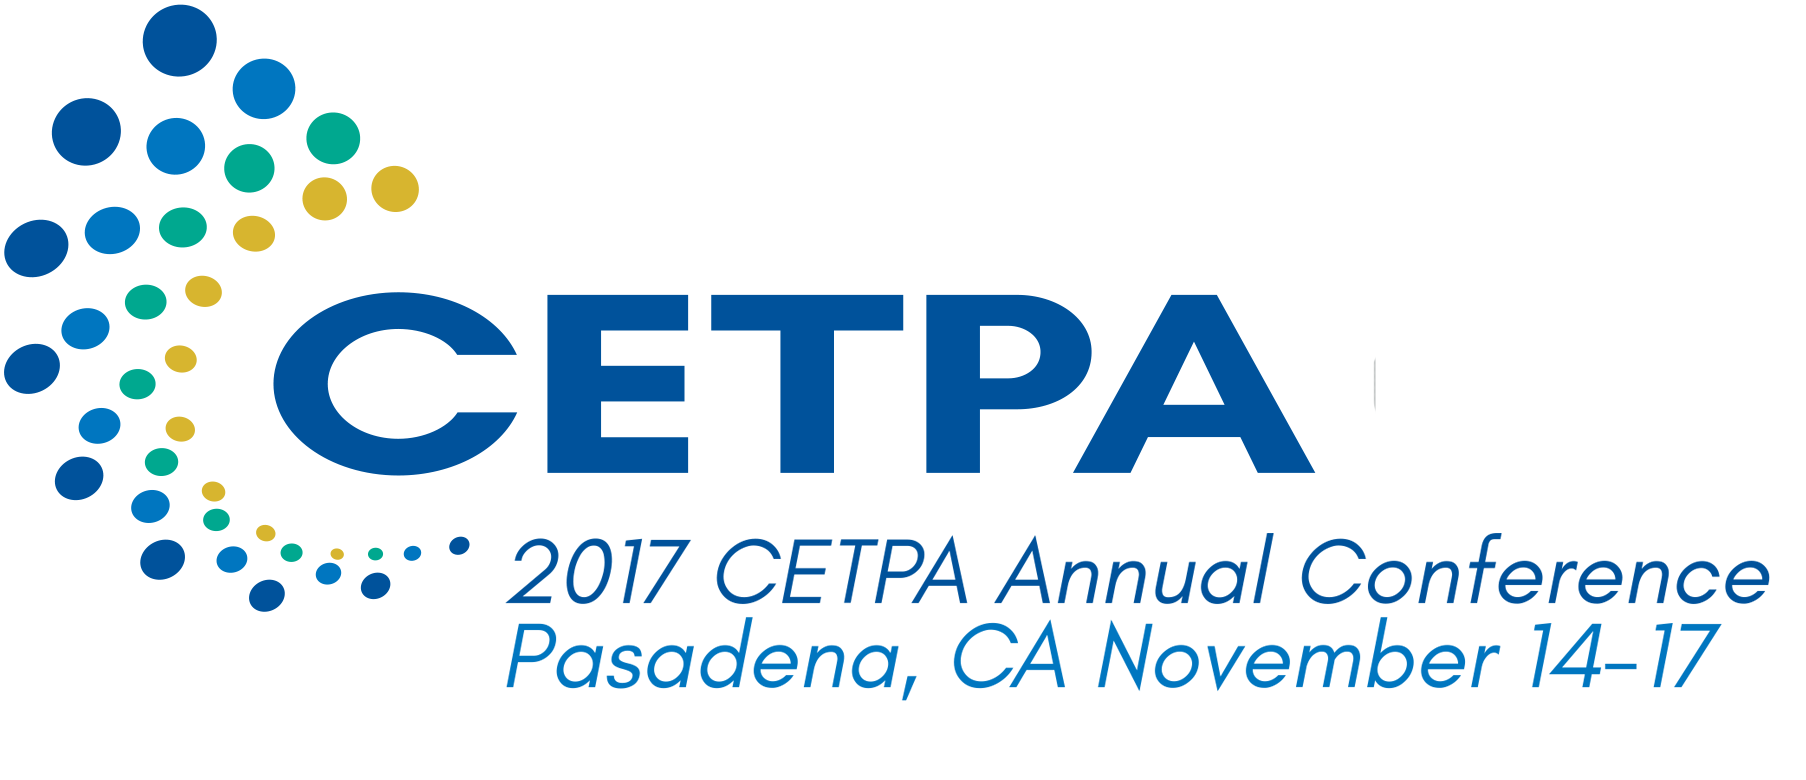 CETPA logo